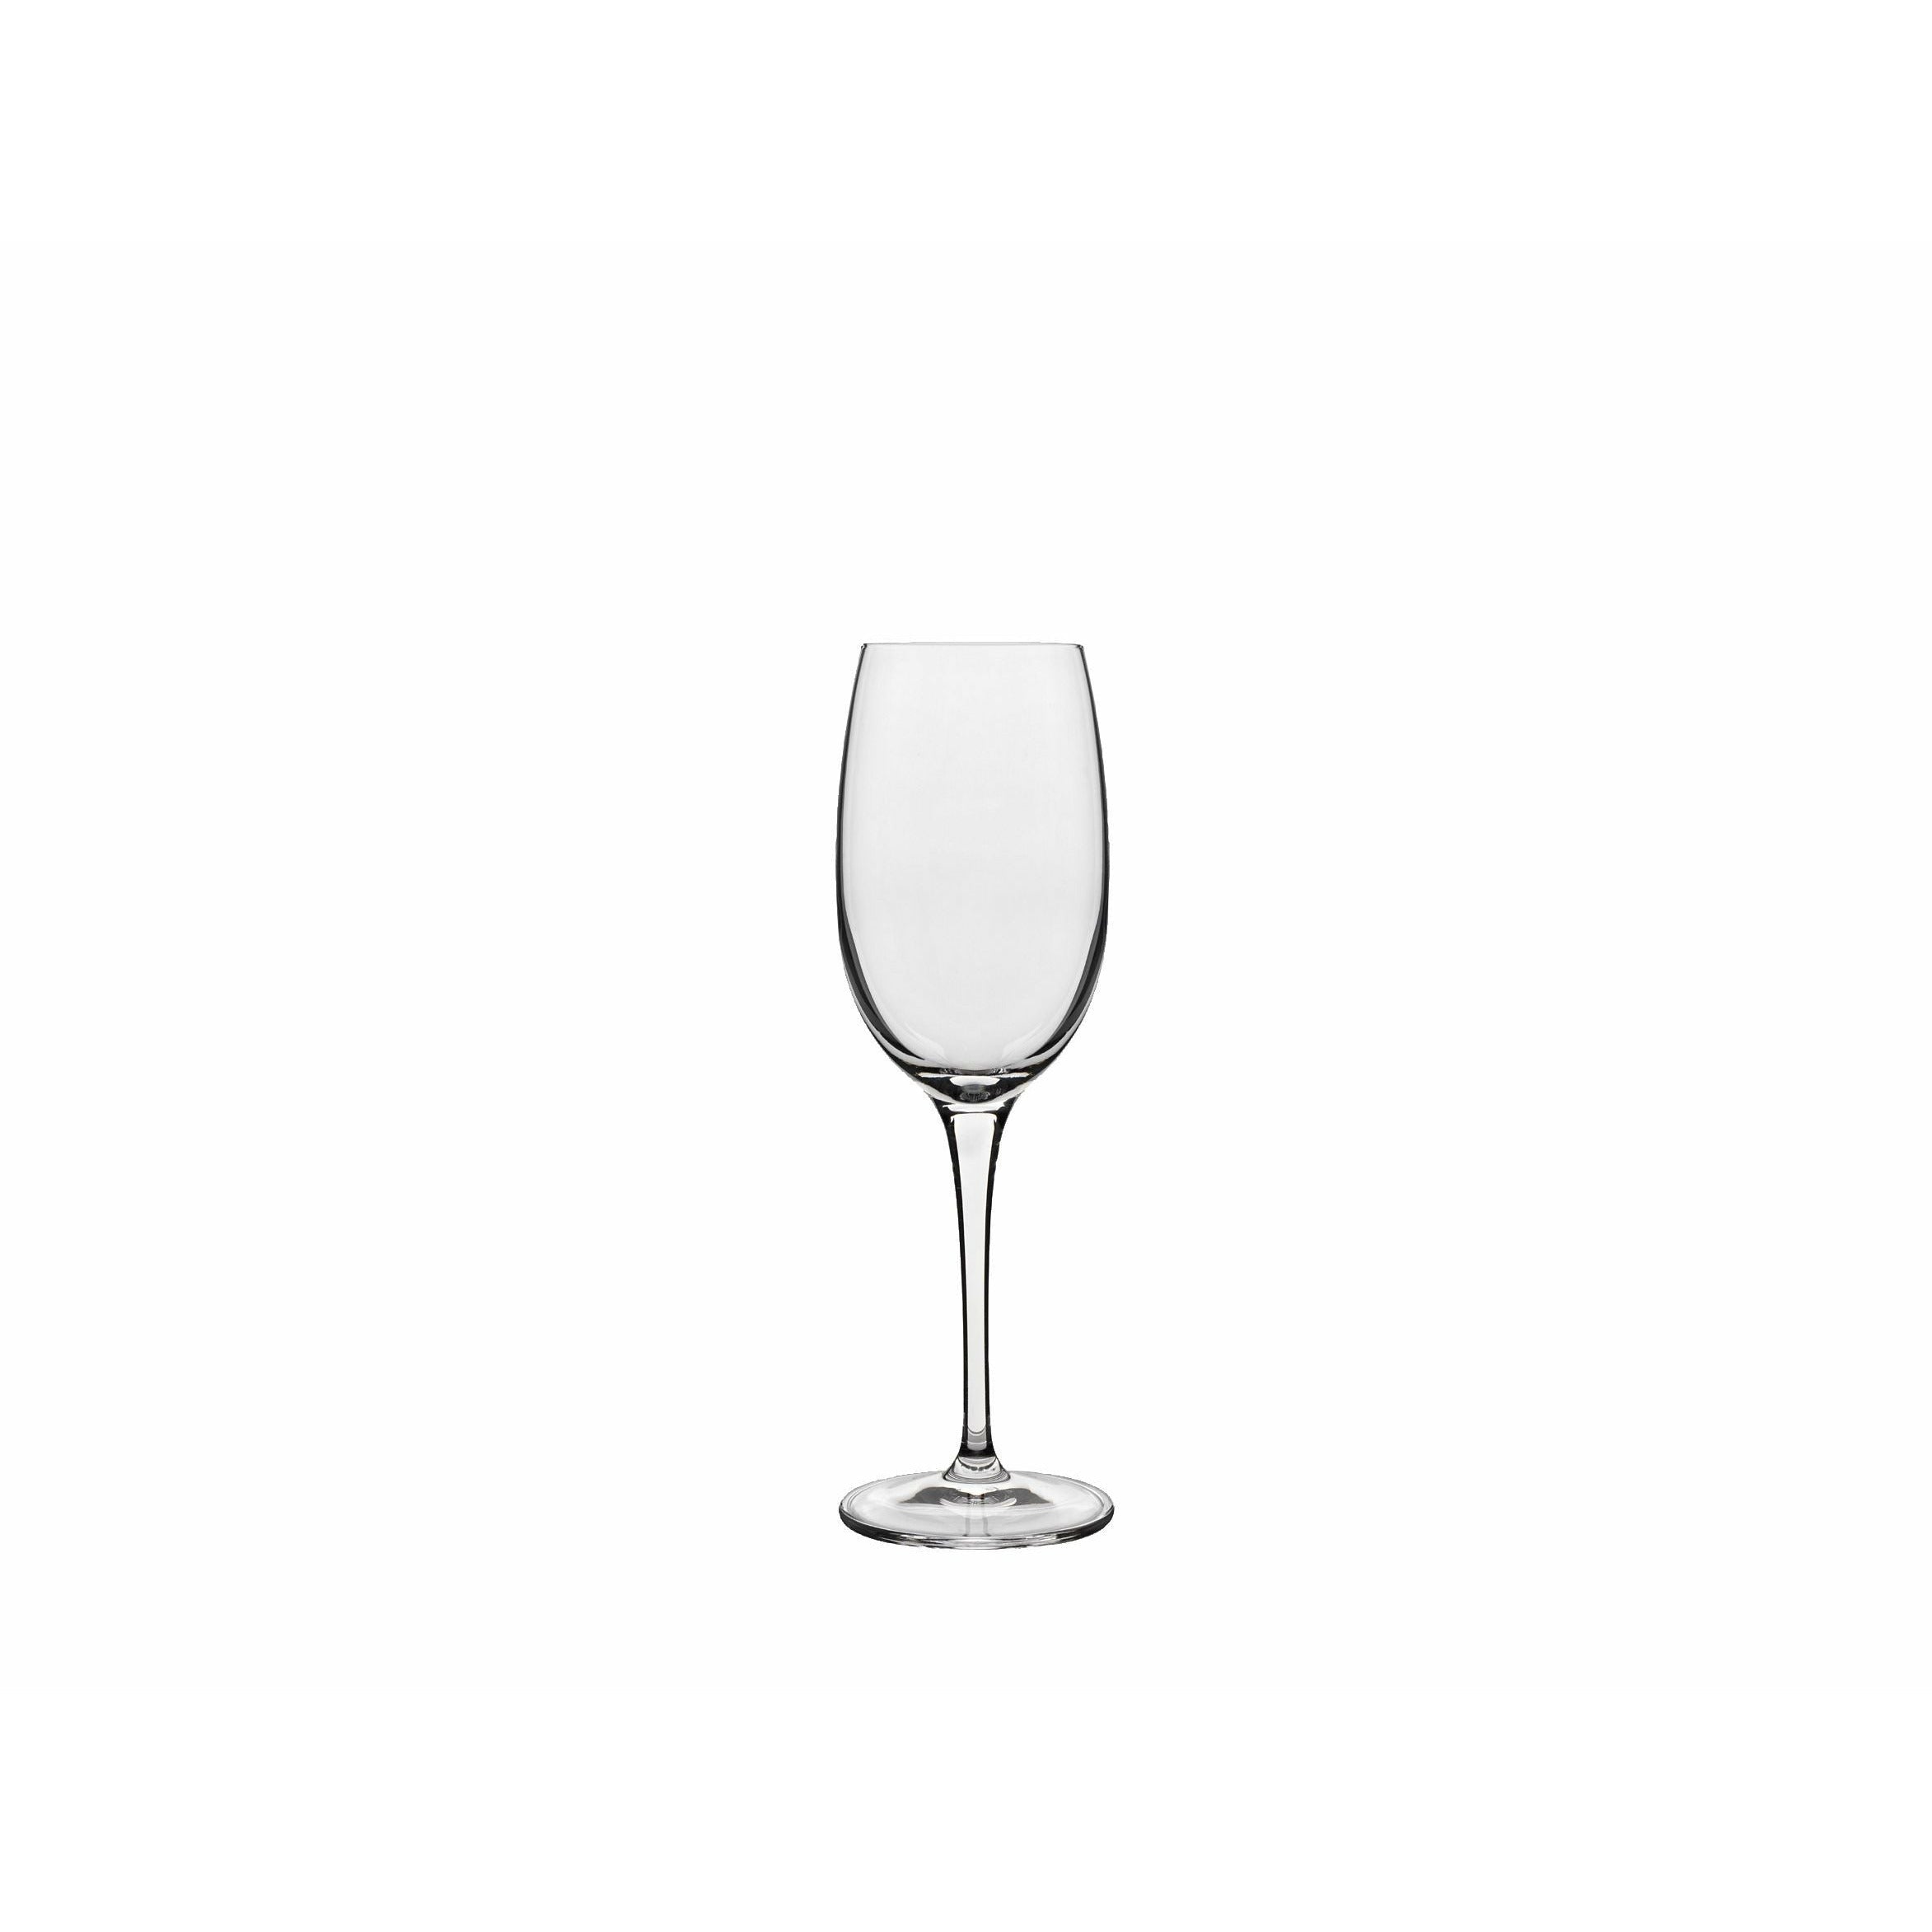 Luigi Bormioli vinoteque likør glas/port vinglas, sæt på 6